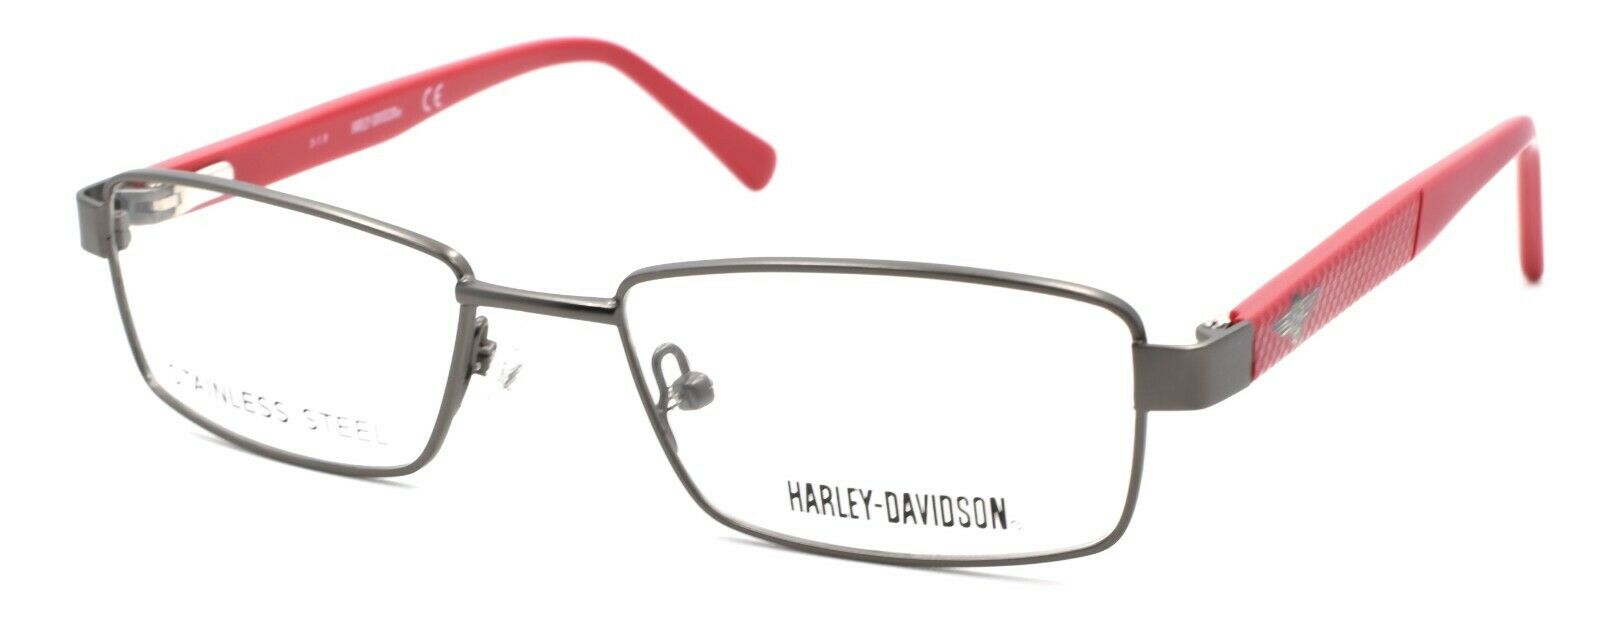 1-Harley Davidson HDT0128T 009 Eyeglasses Frames SMALL 49-17-135 Gunmetal + CASE-664689895557-IKSpecs